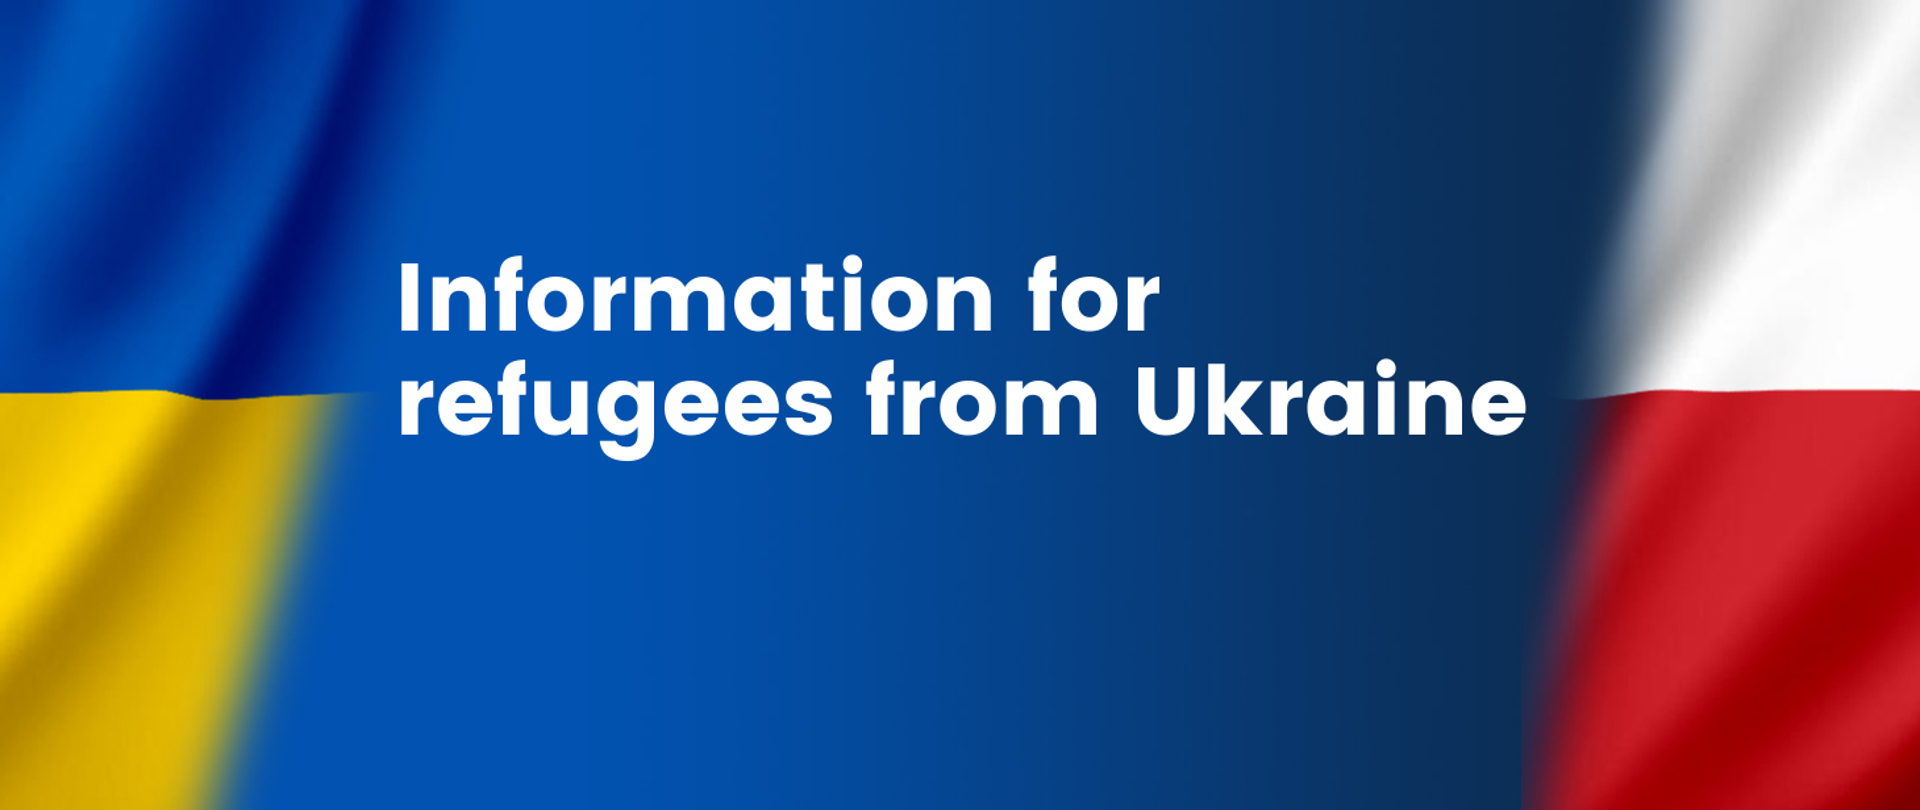 Information for refugees from Ukraine